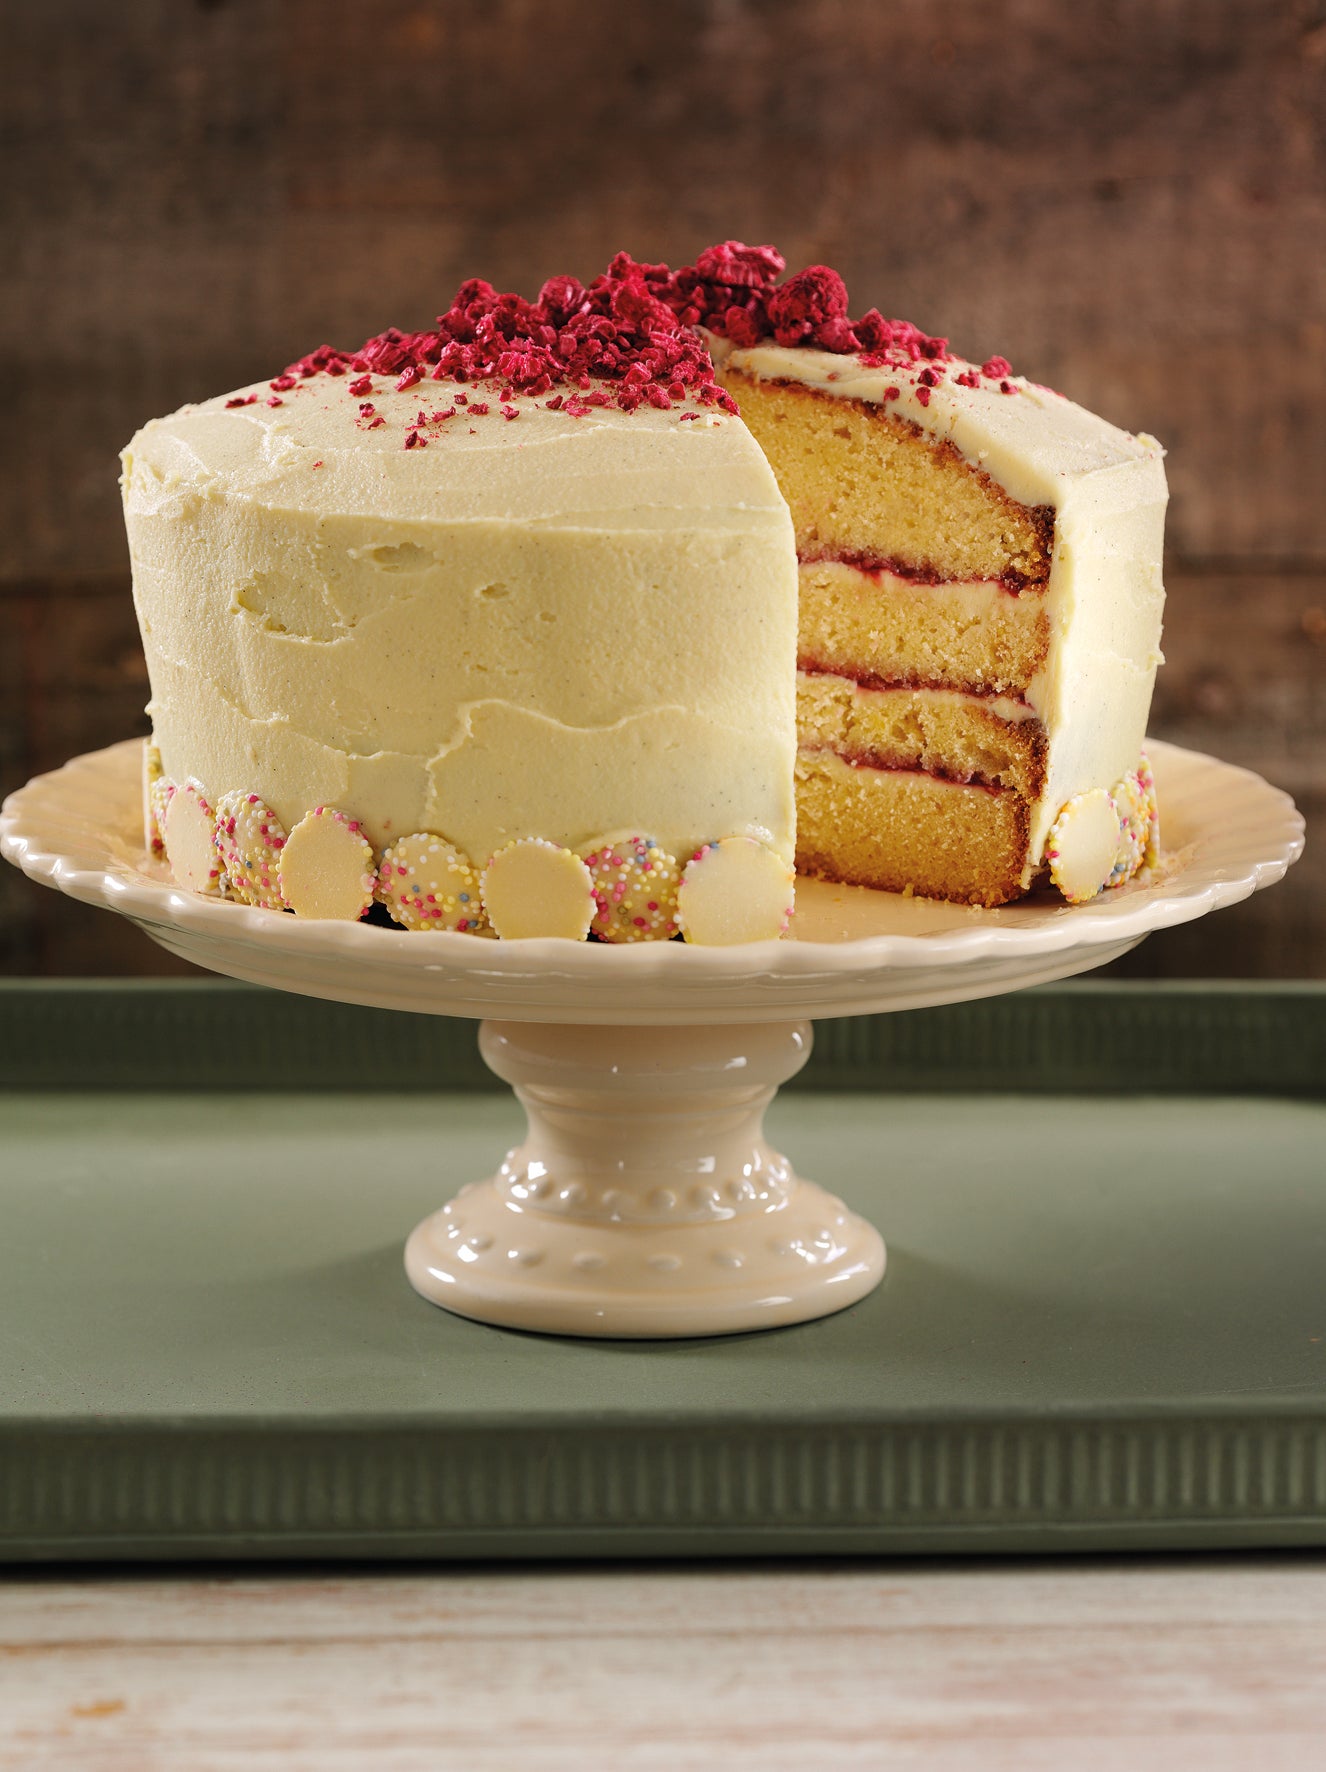 Vanilla sponge cake recipe | Vanilla cake recipe easy | Vanilla cake recipe  from scratch - Rumki's Golden Spoon